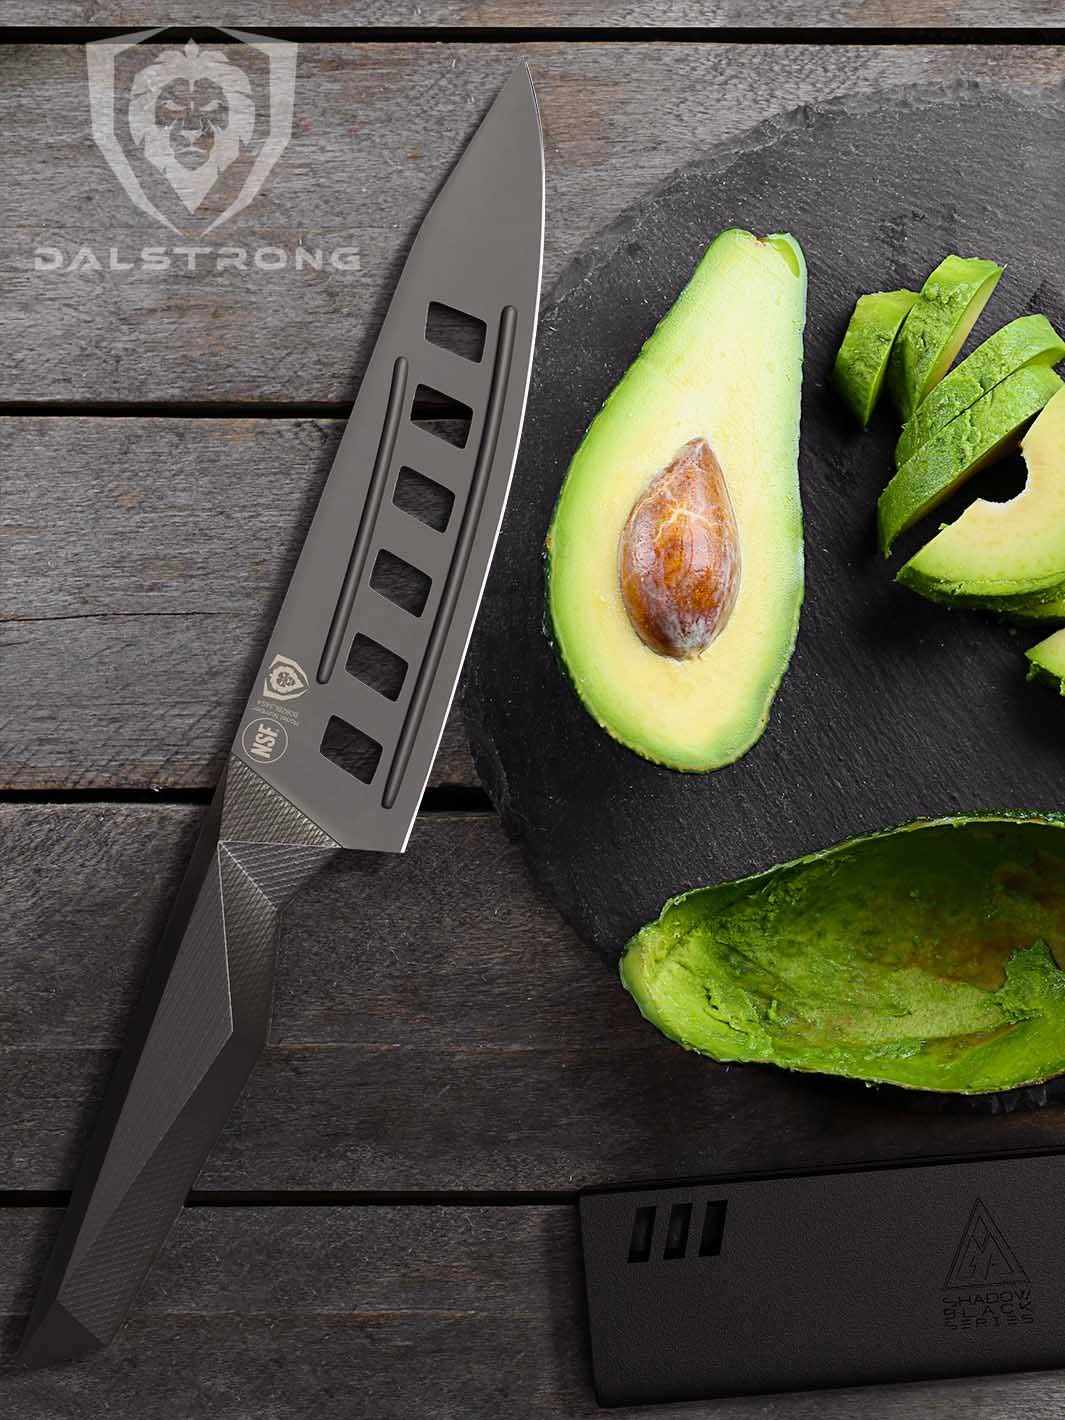 Dalstrong Chef Knife - 8 inch - Shadow Black Series - Black Titanium  Nitride Coated - Razor Sharp Kitchen Knife - High Carbon 7CR17MOV-X Vacuum